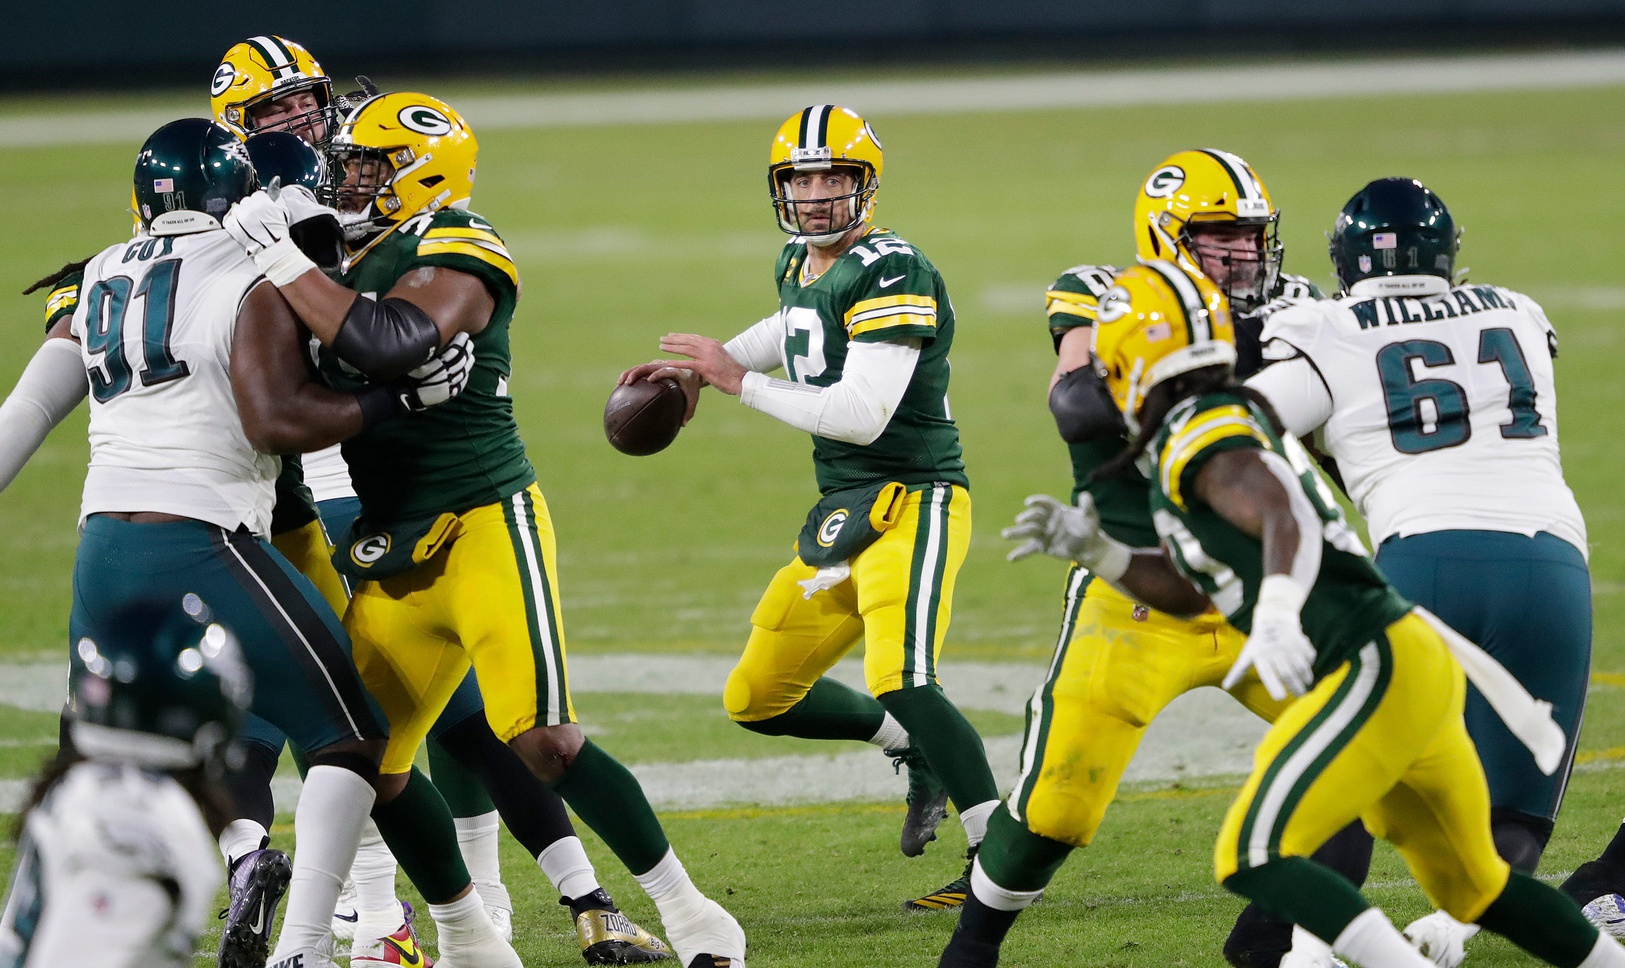 Packers vs Commanders Prediction, Stream, Odds & Picks